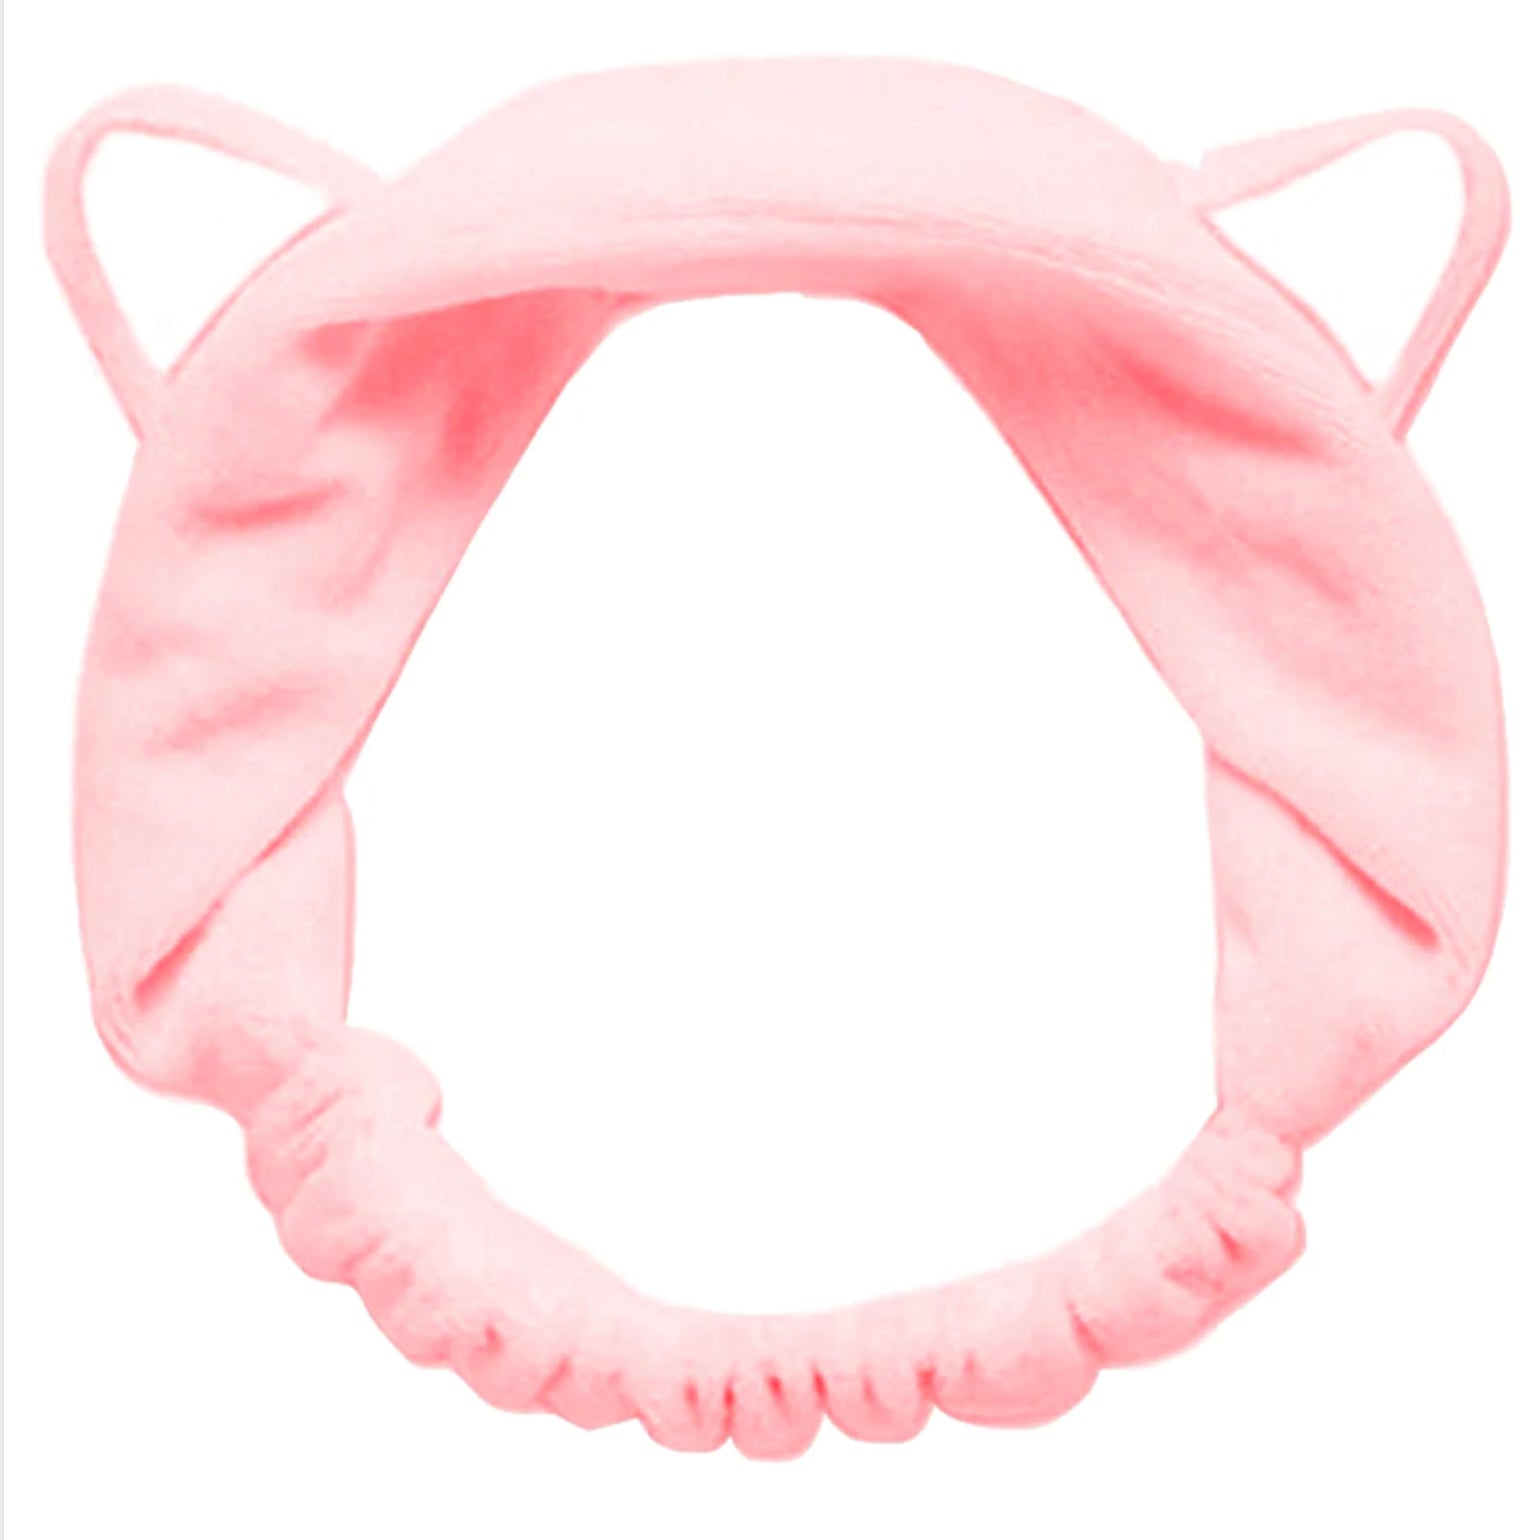 LEADERS Cosmetics Cat Ear Headband(pink)